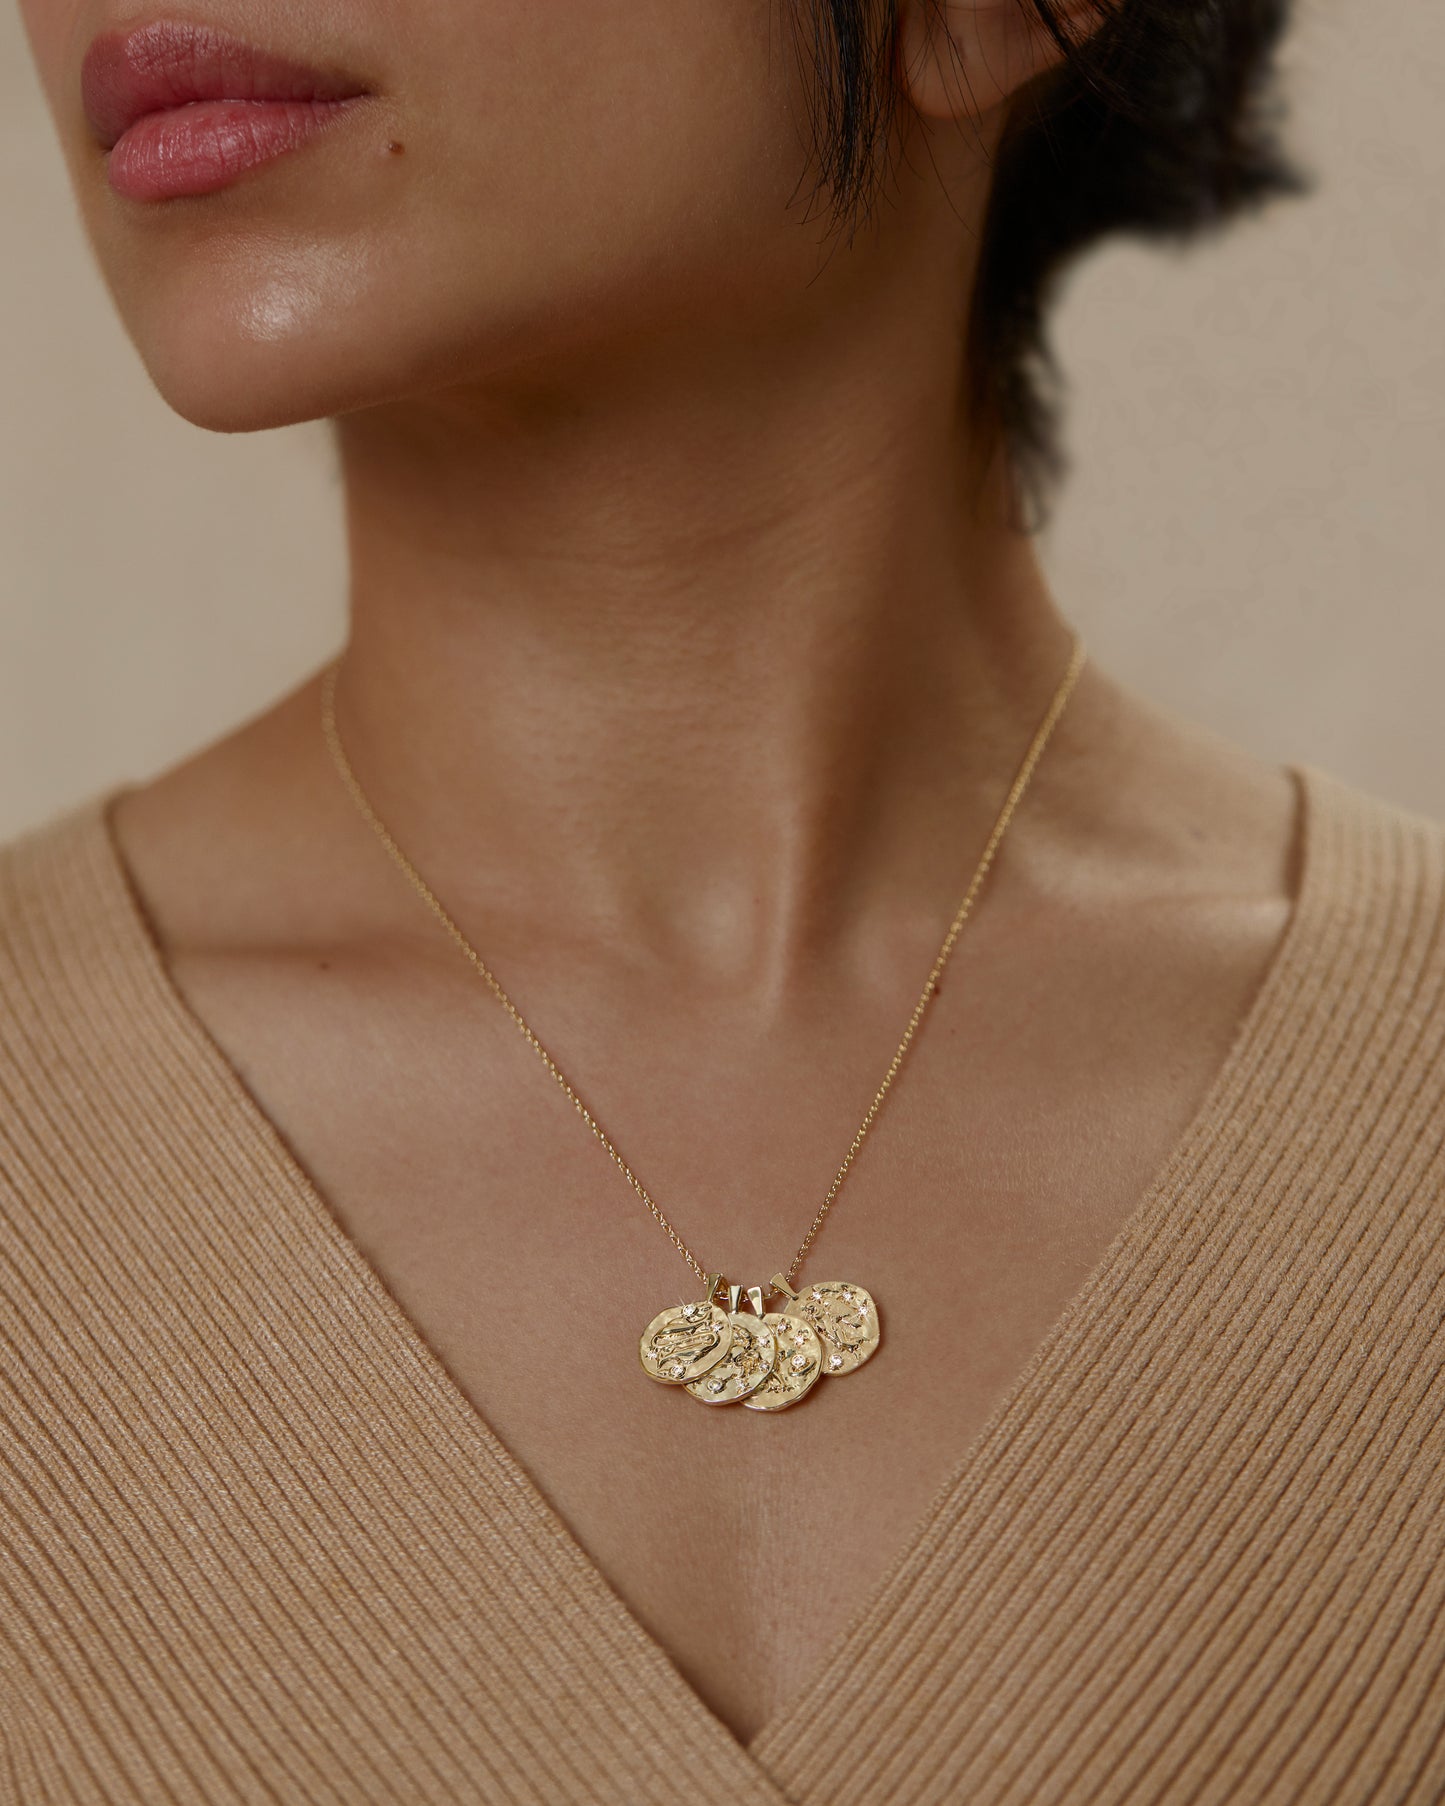 Venus Personalized Necklace